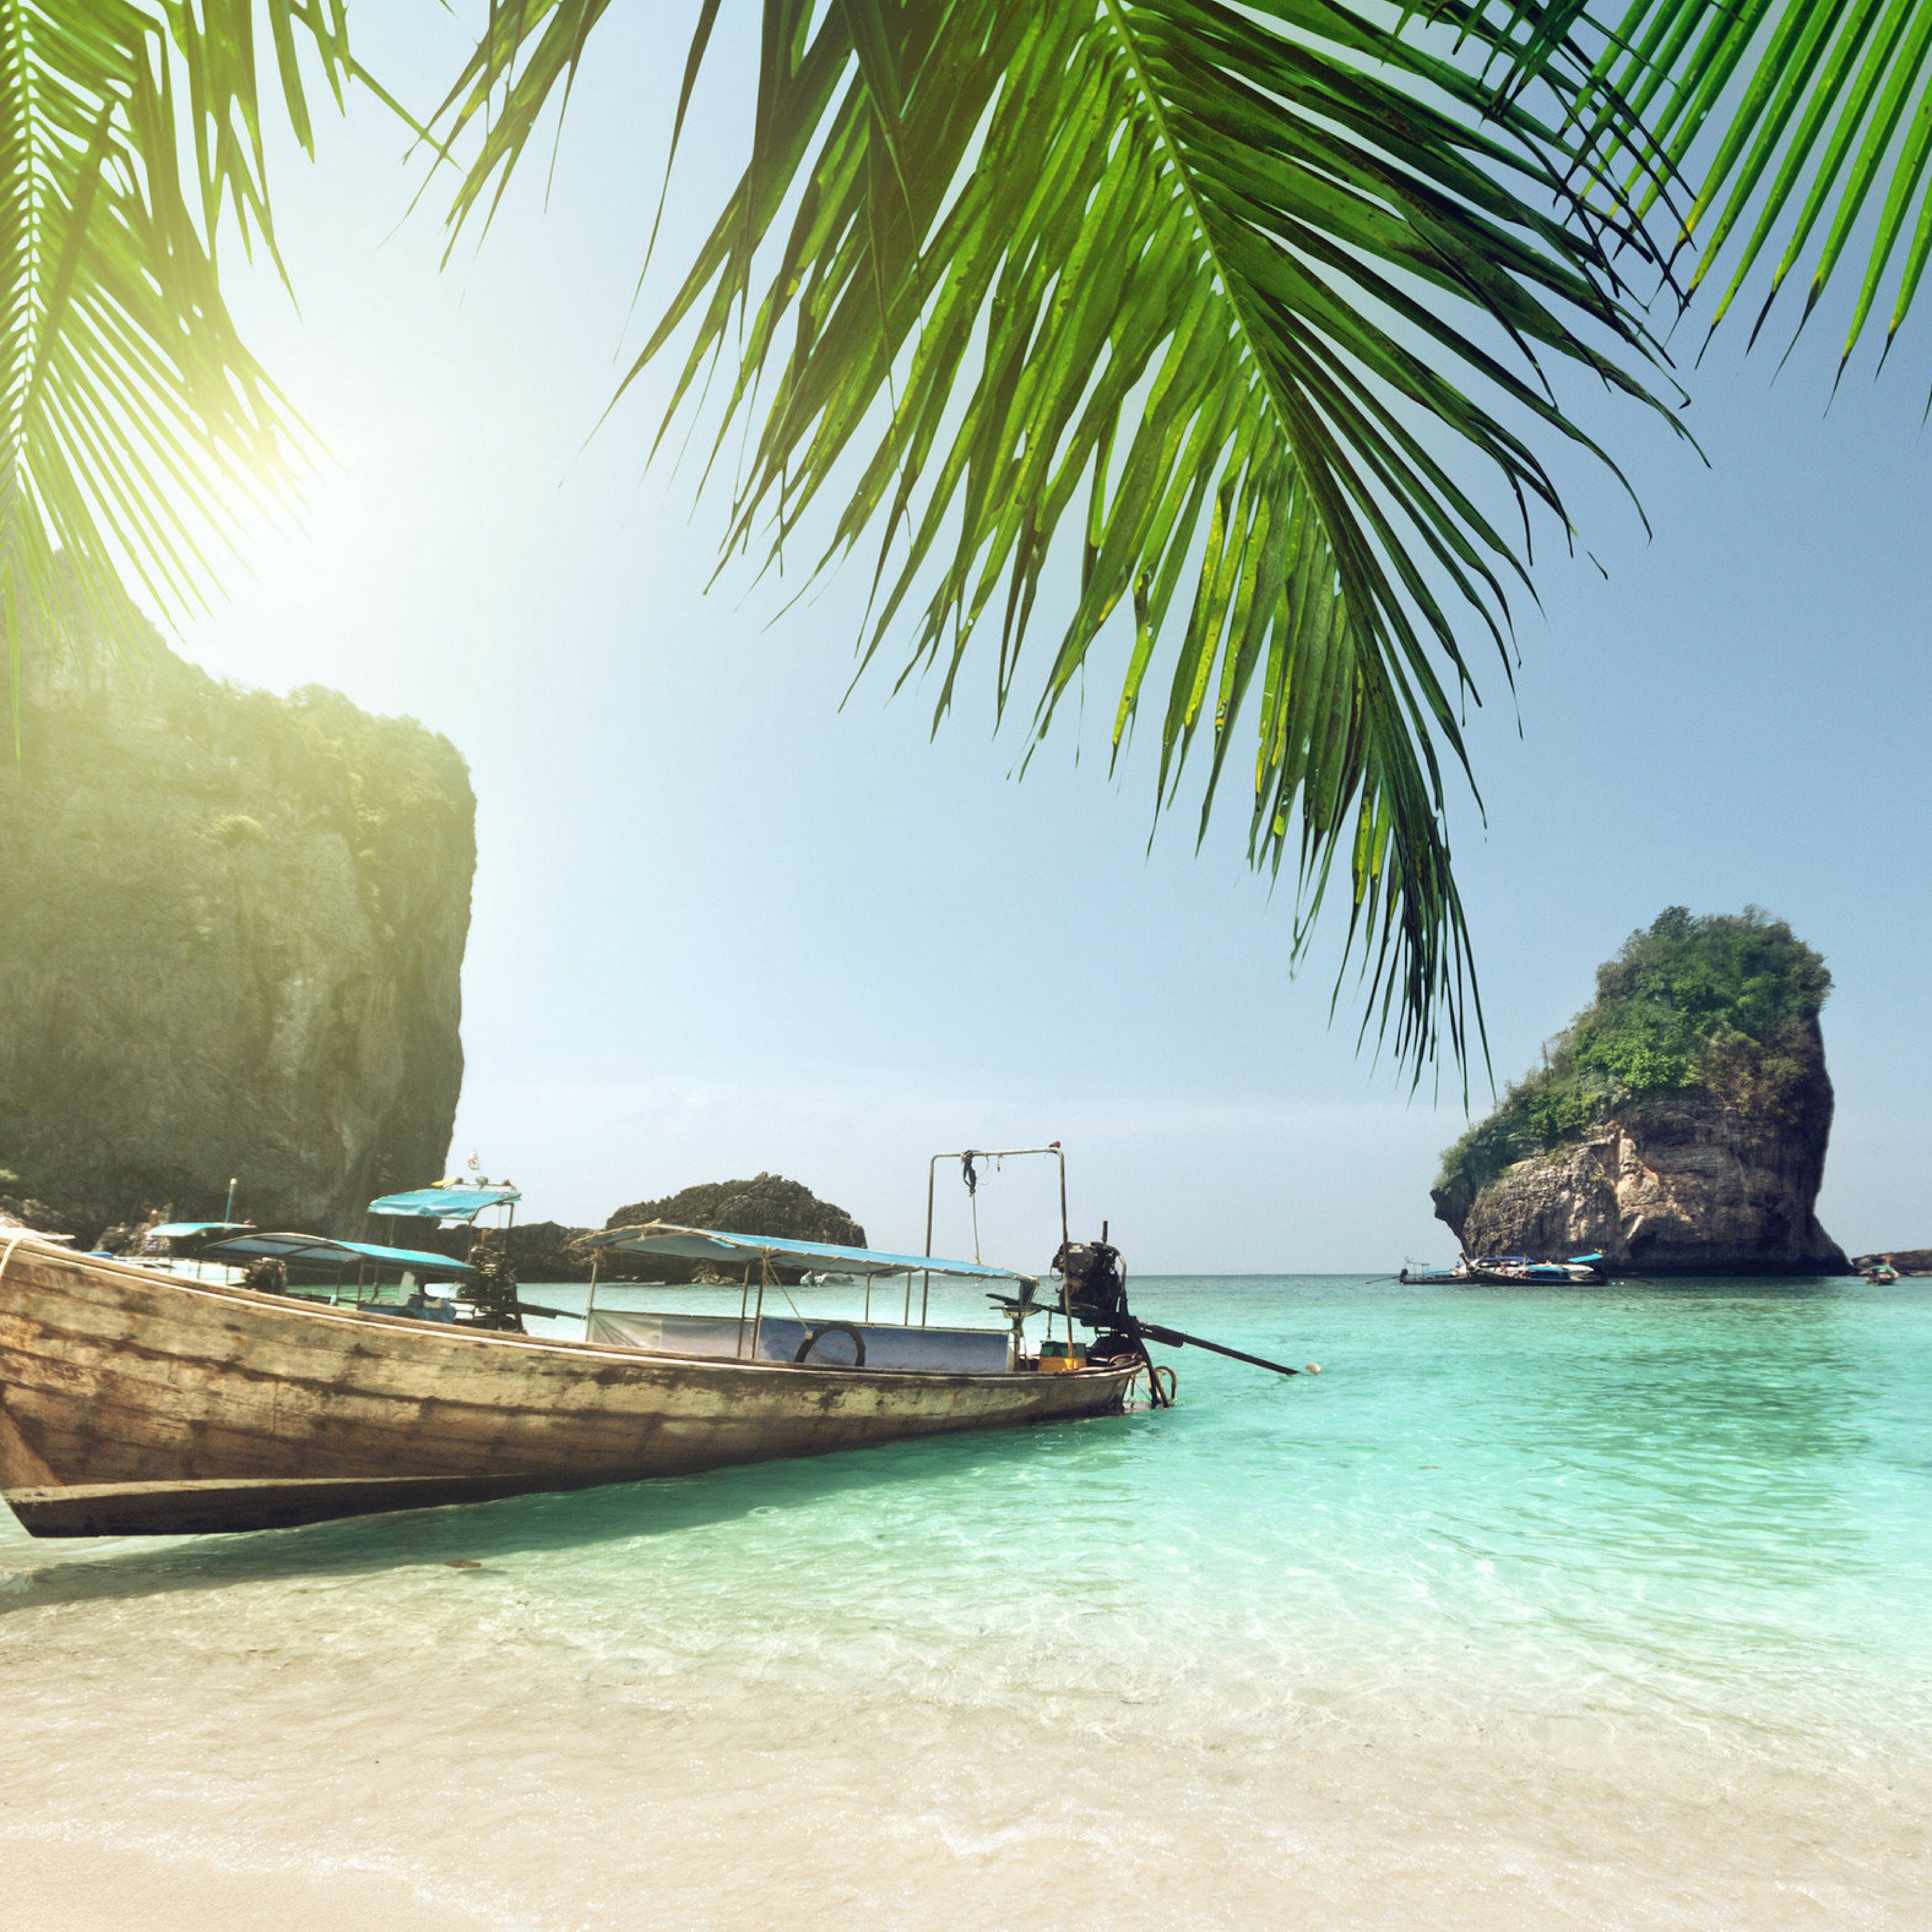 Thailand beach scenery